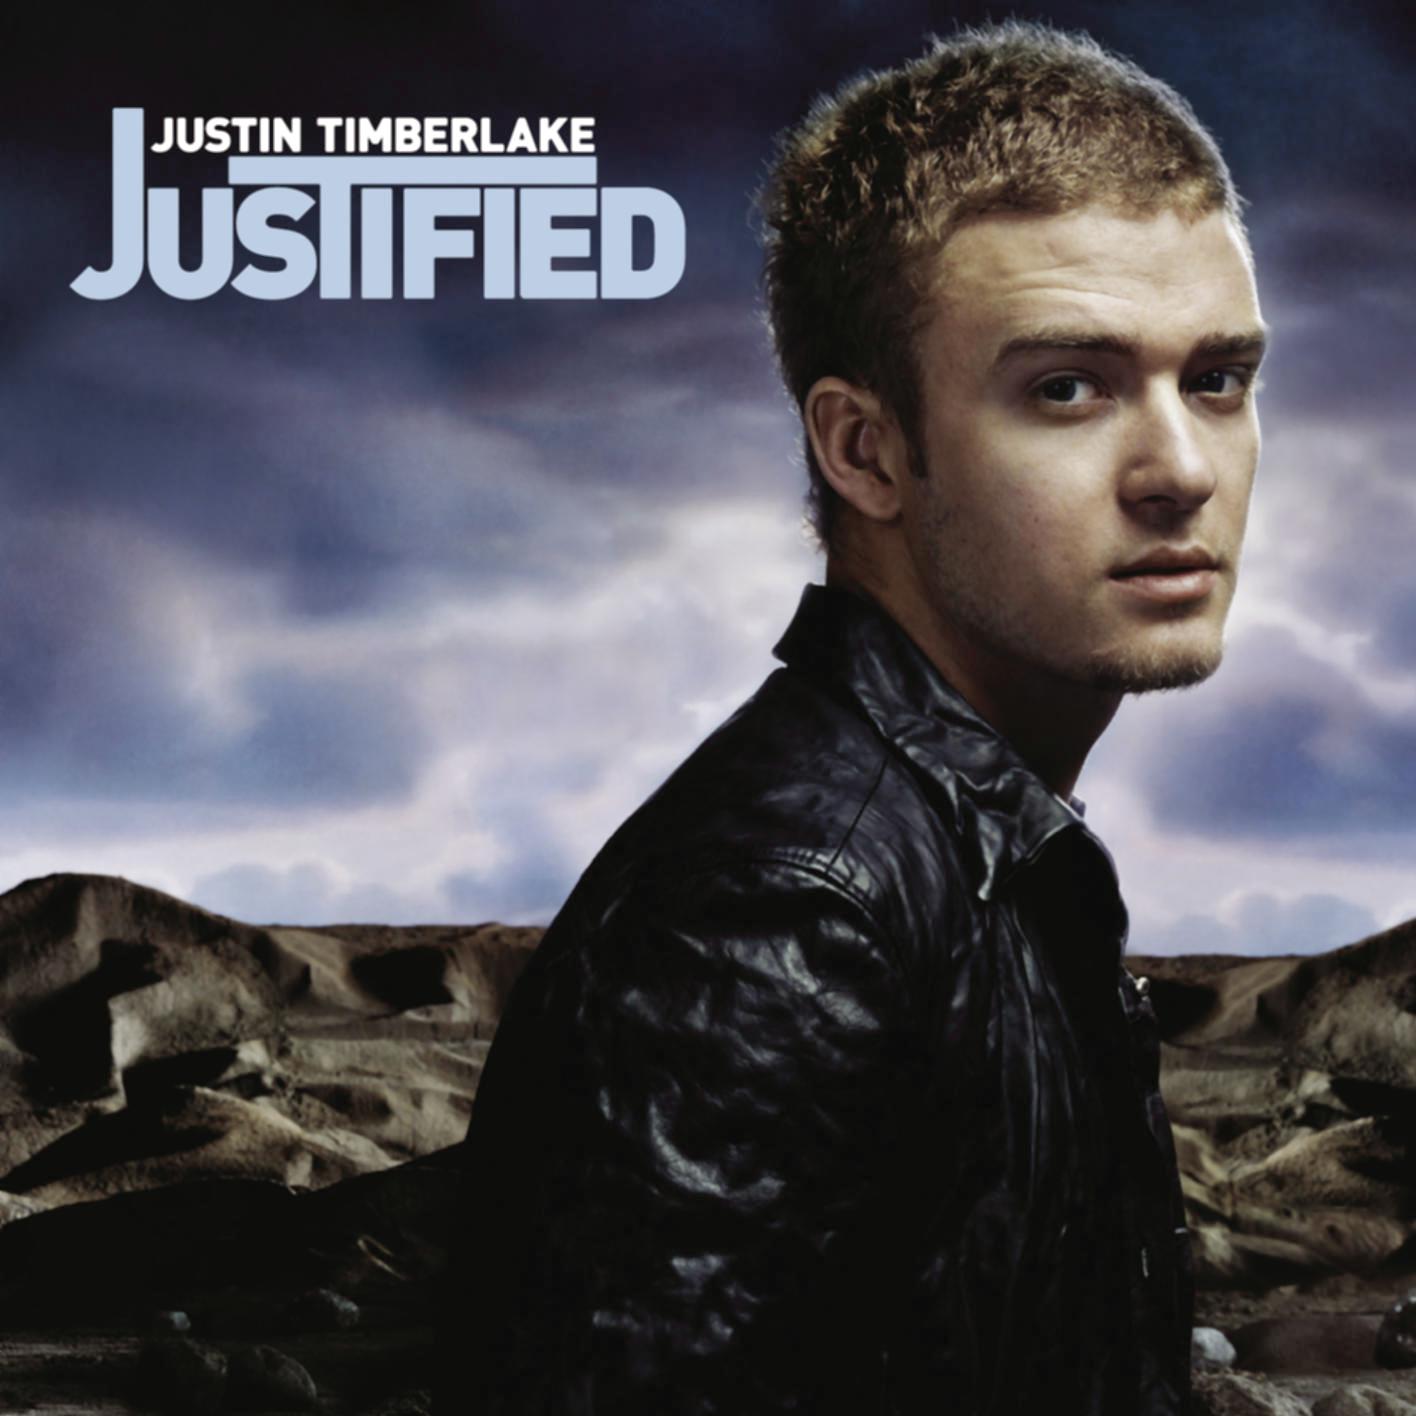 Justin Timberlake – Justified (Cover Artwork)
Released: November 5, 2002 
Label: Jive Records
